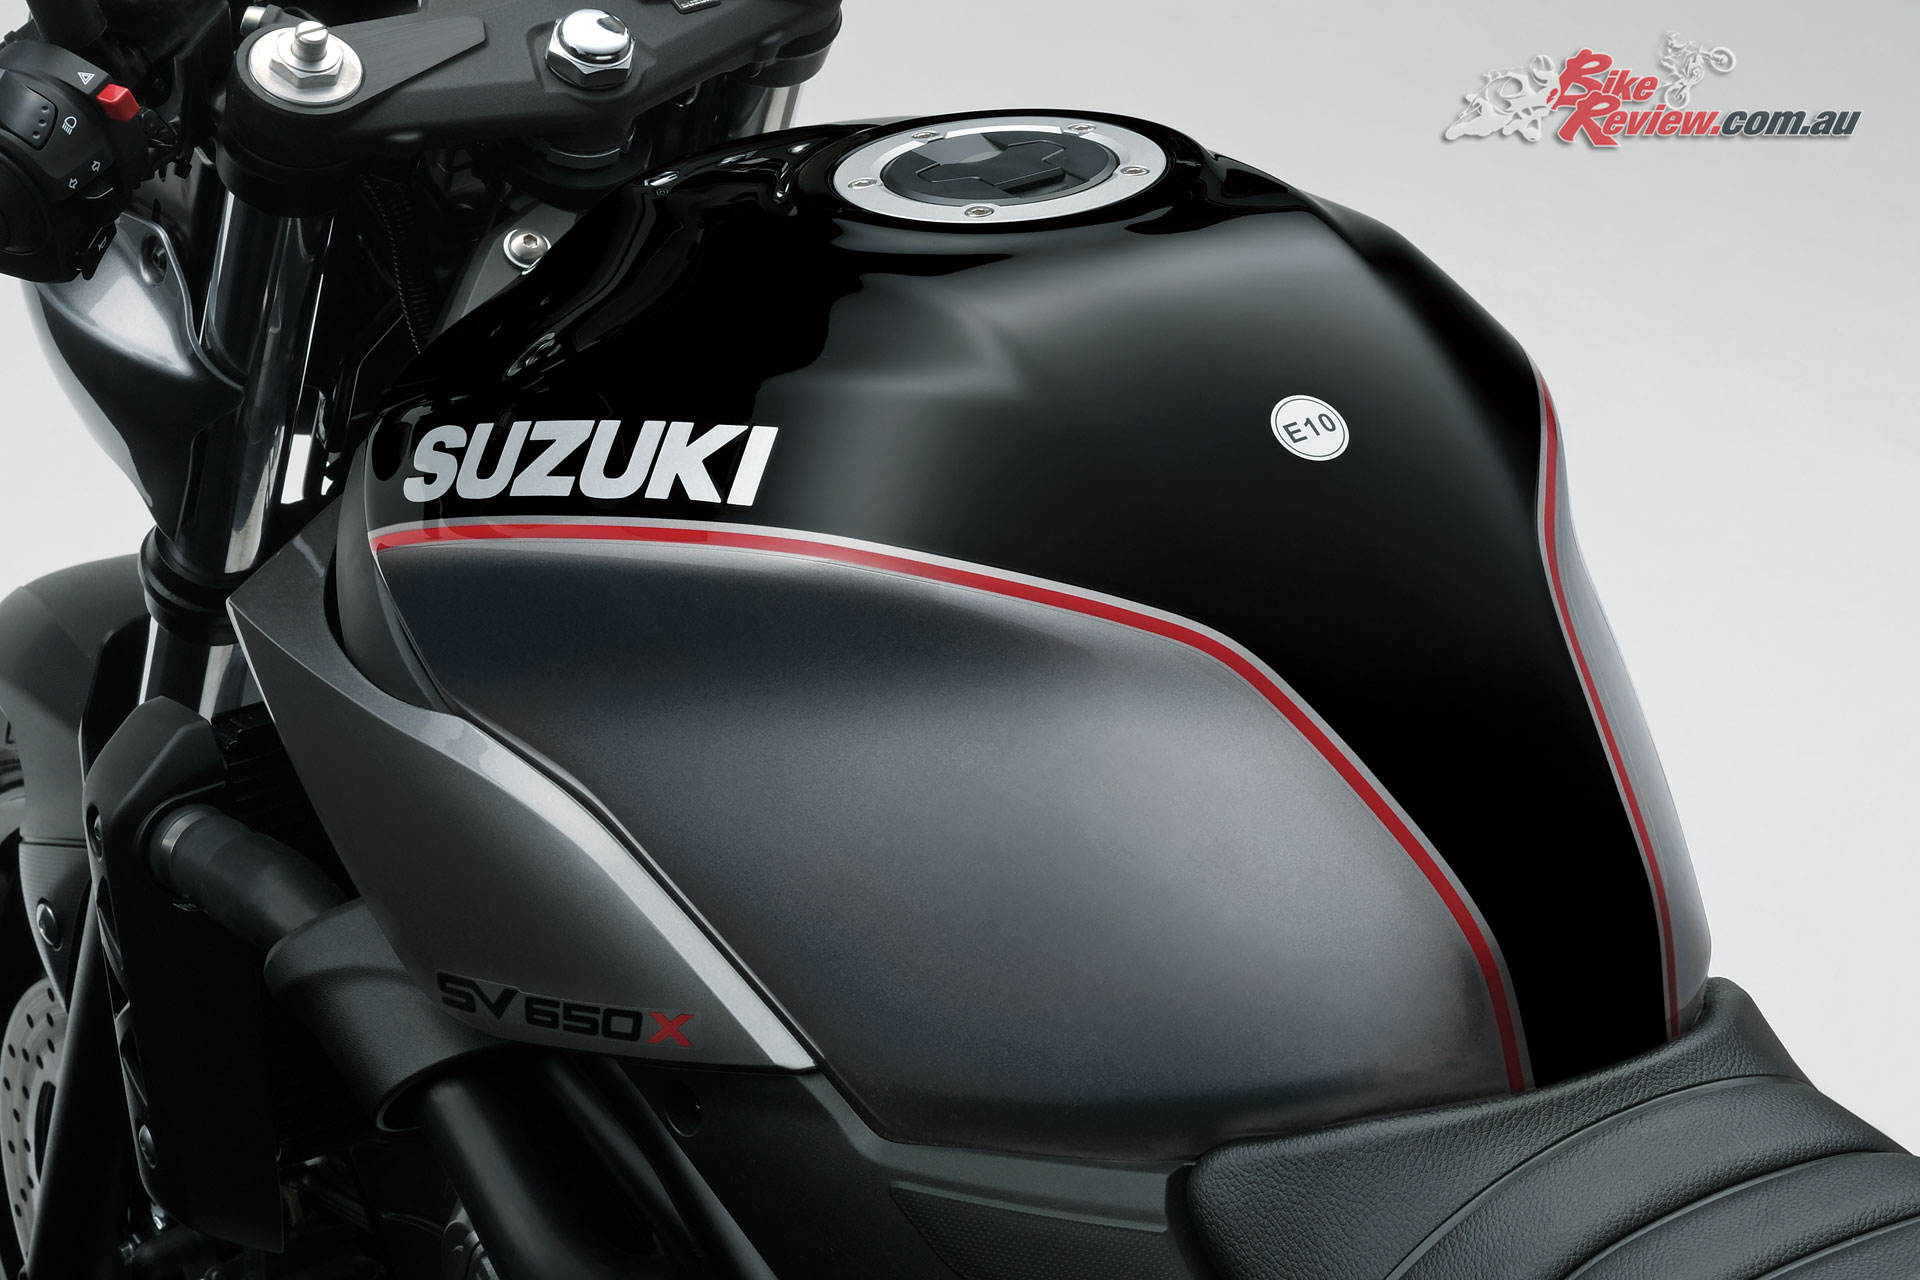 Suzuki unveil 2018 SV650X Cafe Racer at EICMA - Bike Review